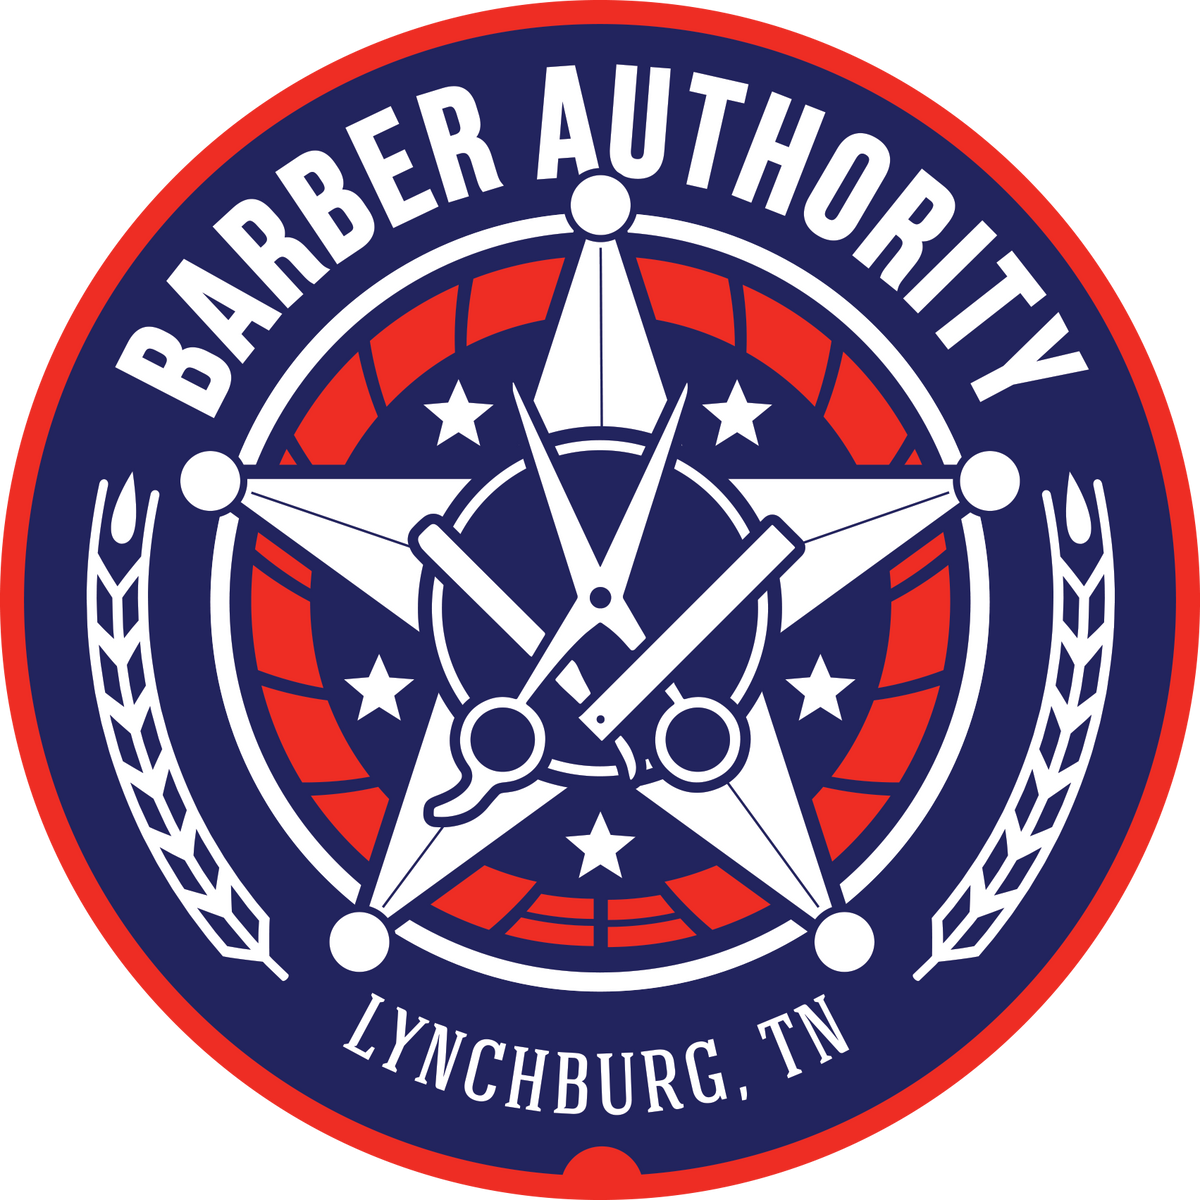 Barber Authority